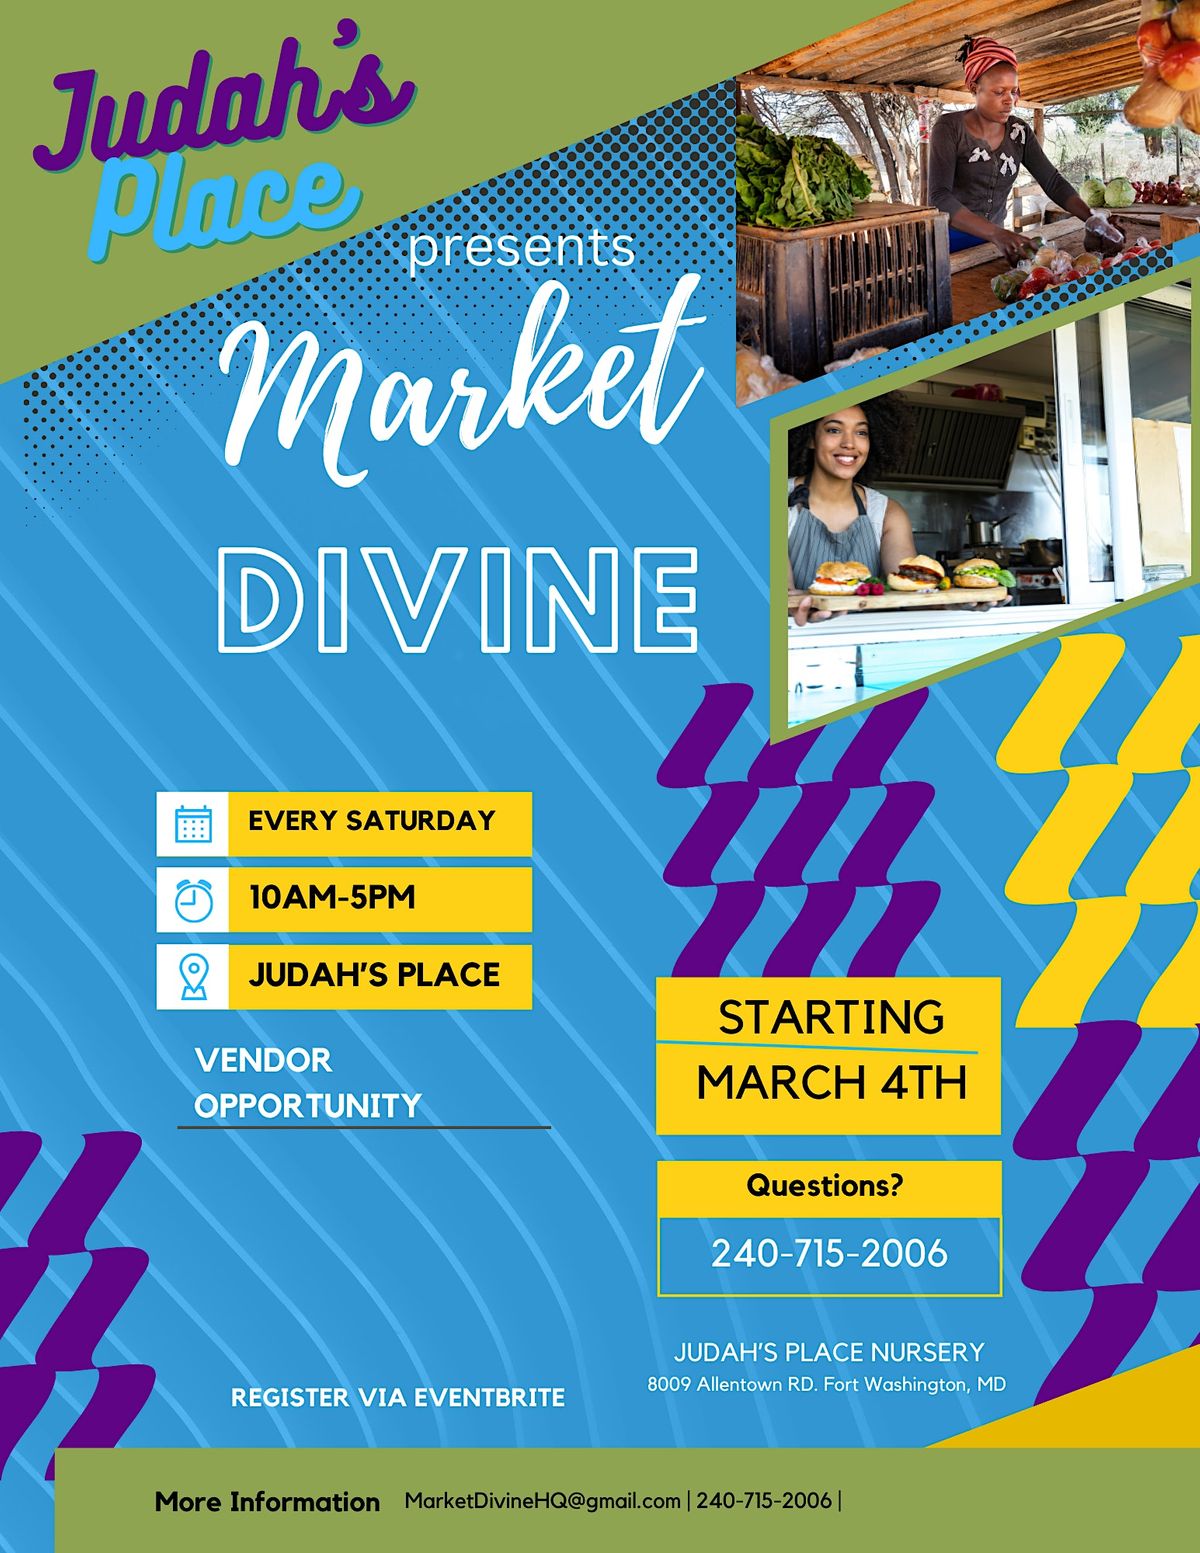 Market Divine Outdoor Vendor Market